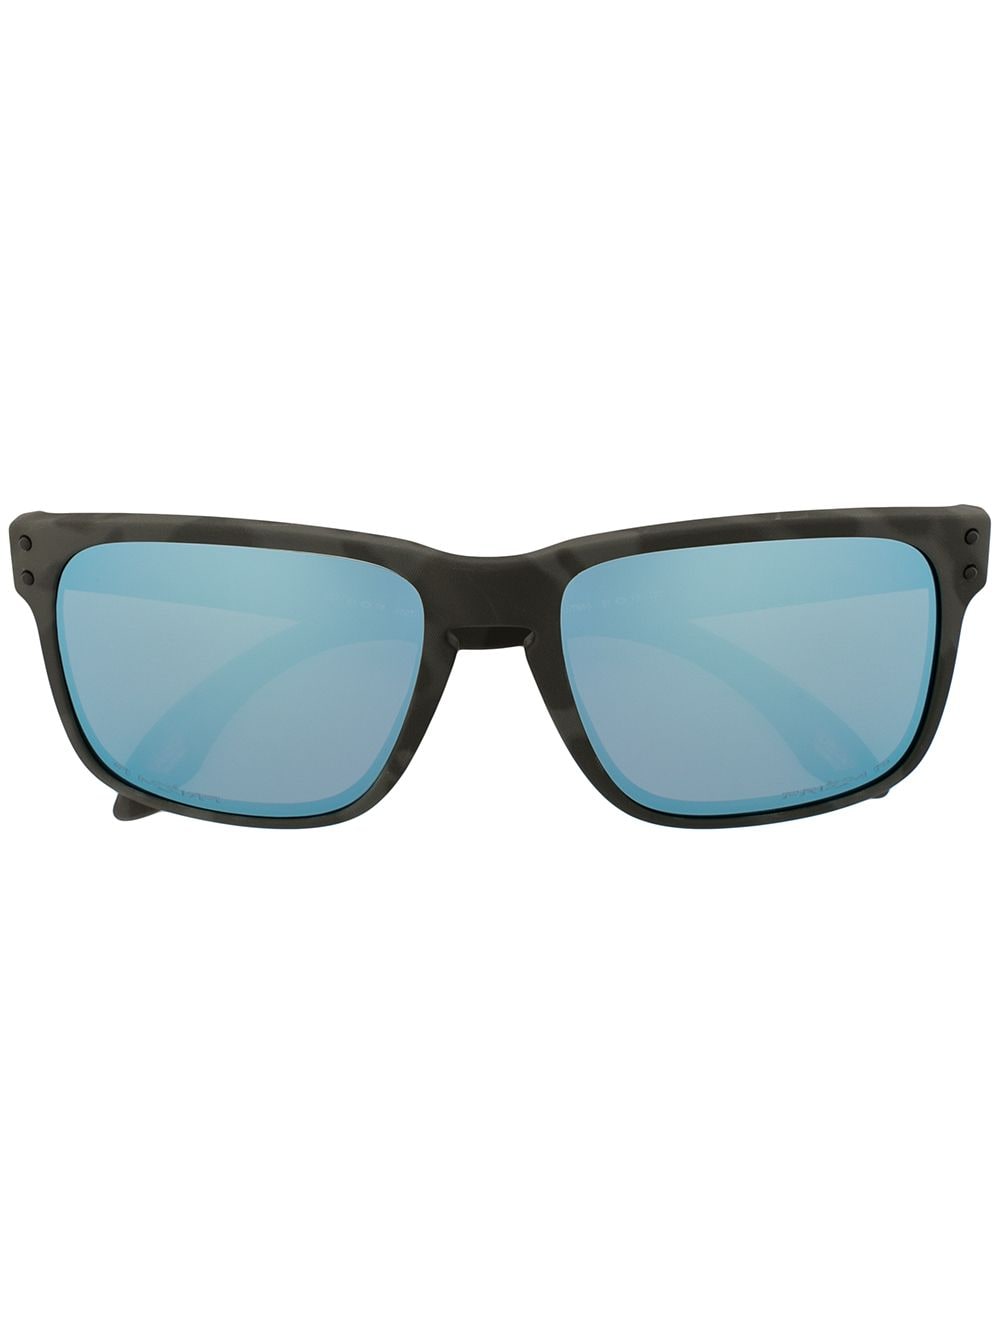 mirrored-lense Sunglasses - Farfetch